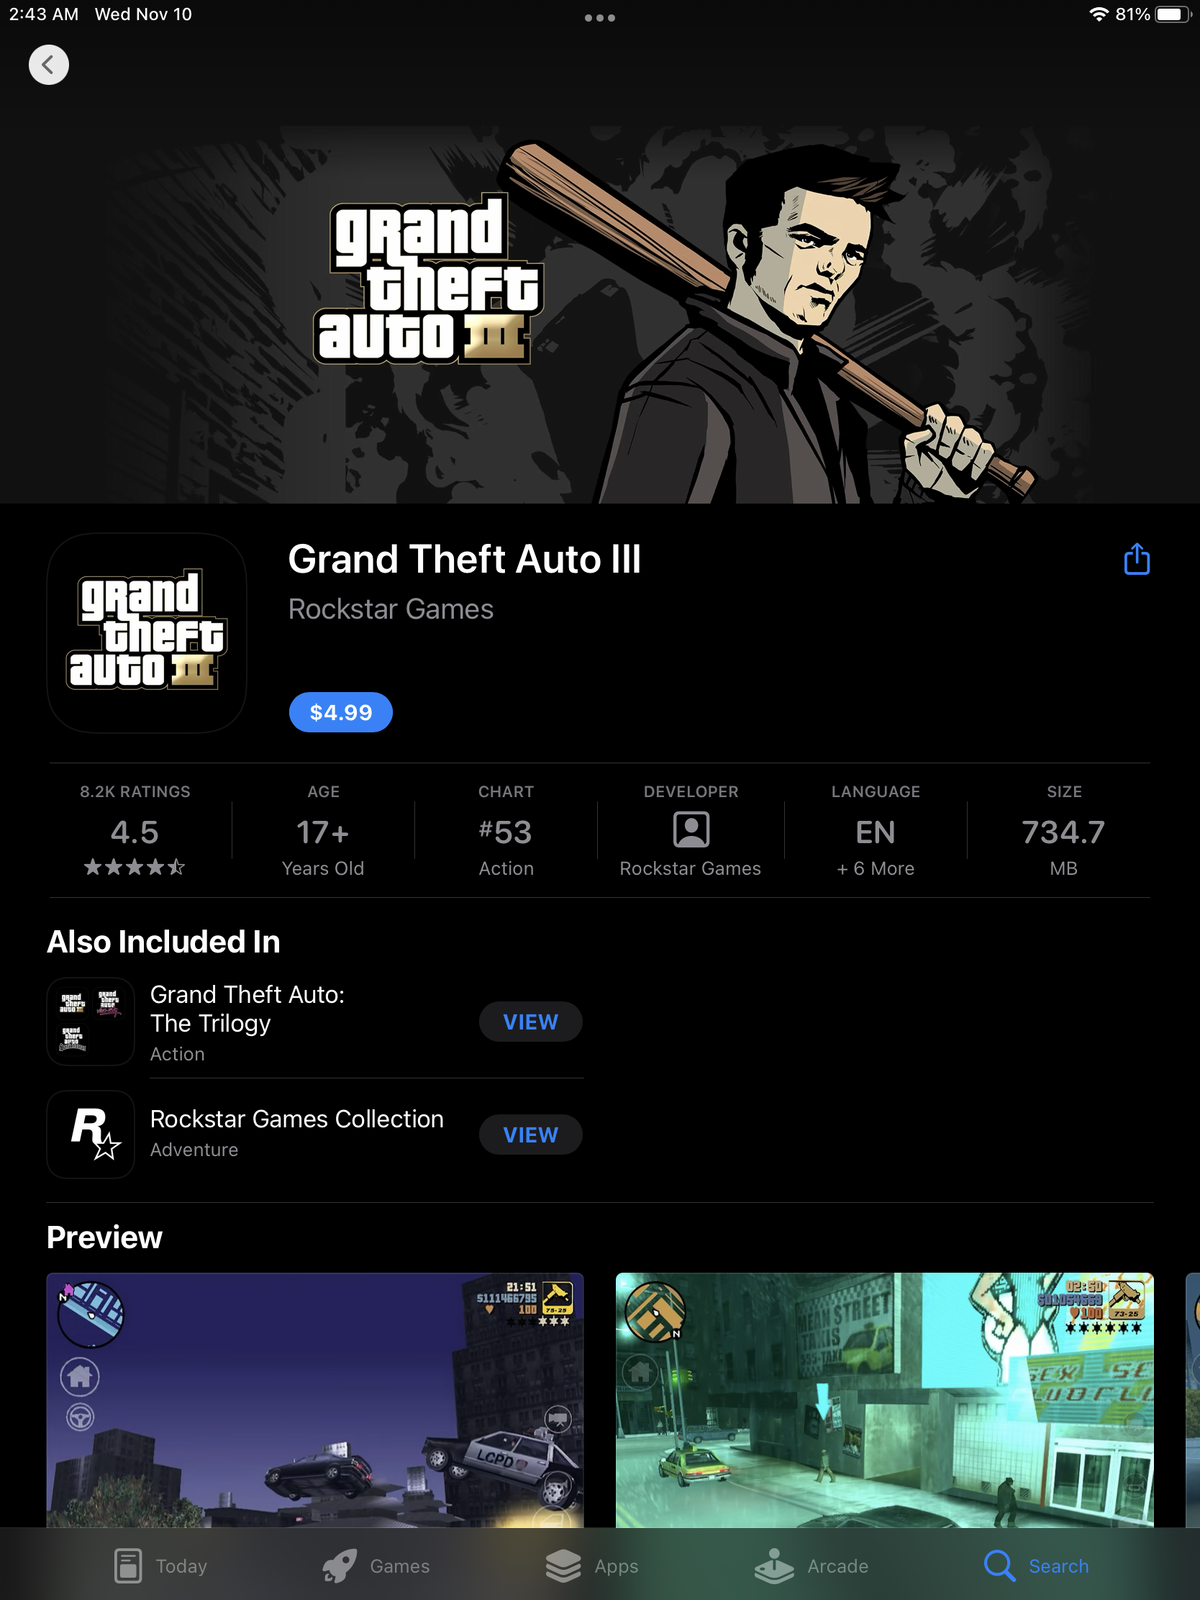 Grand Theft Auto 5 - iFruit App - First Look iPhone iPad iOS GTA5